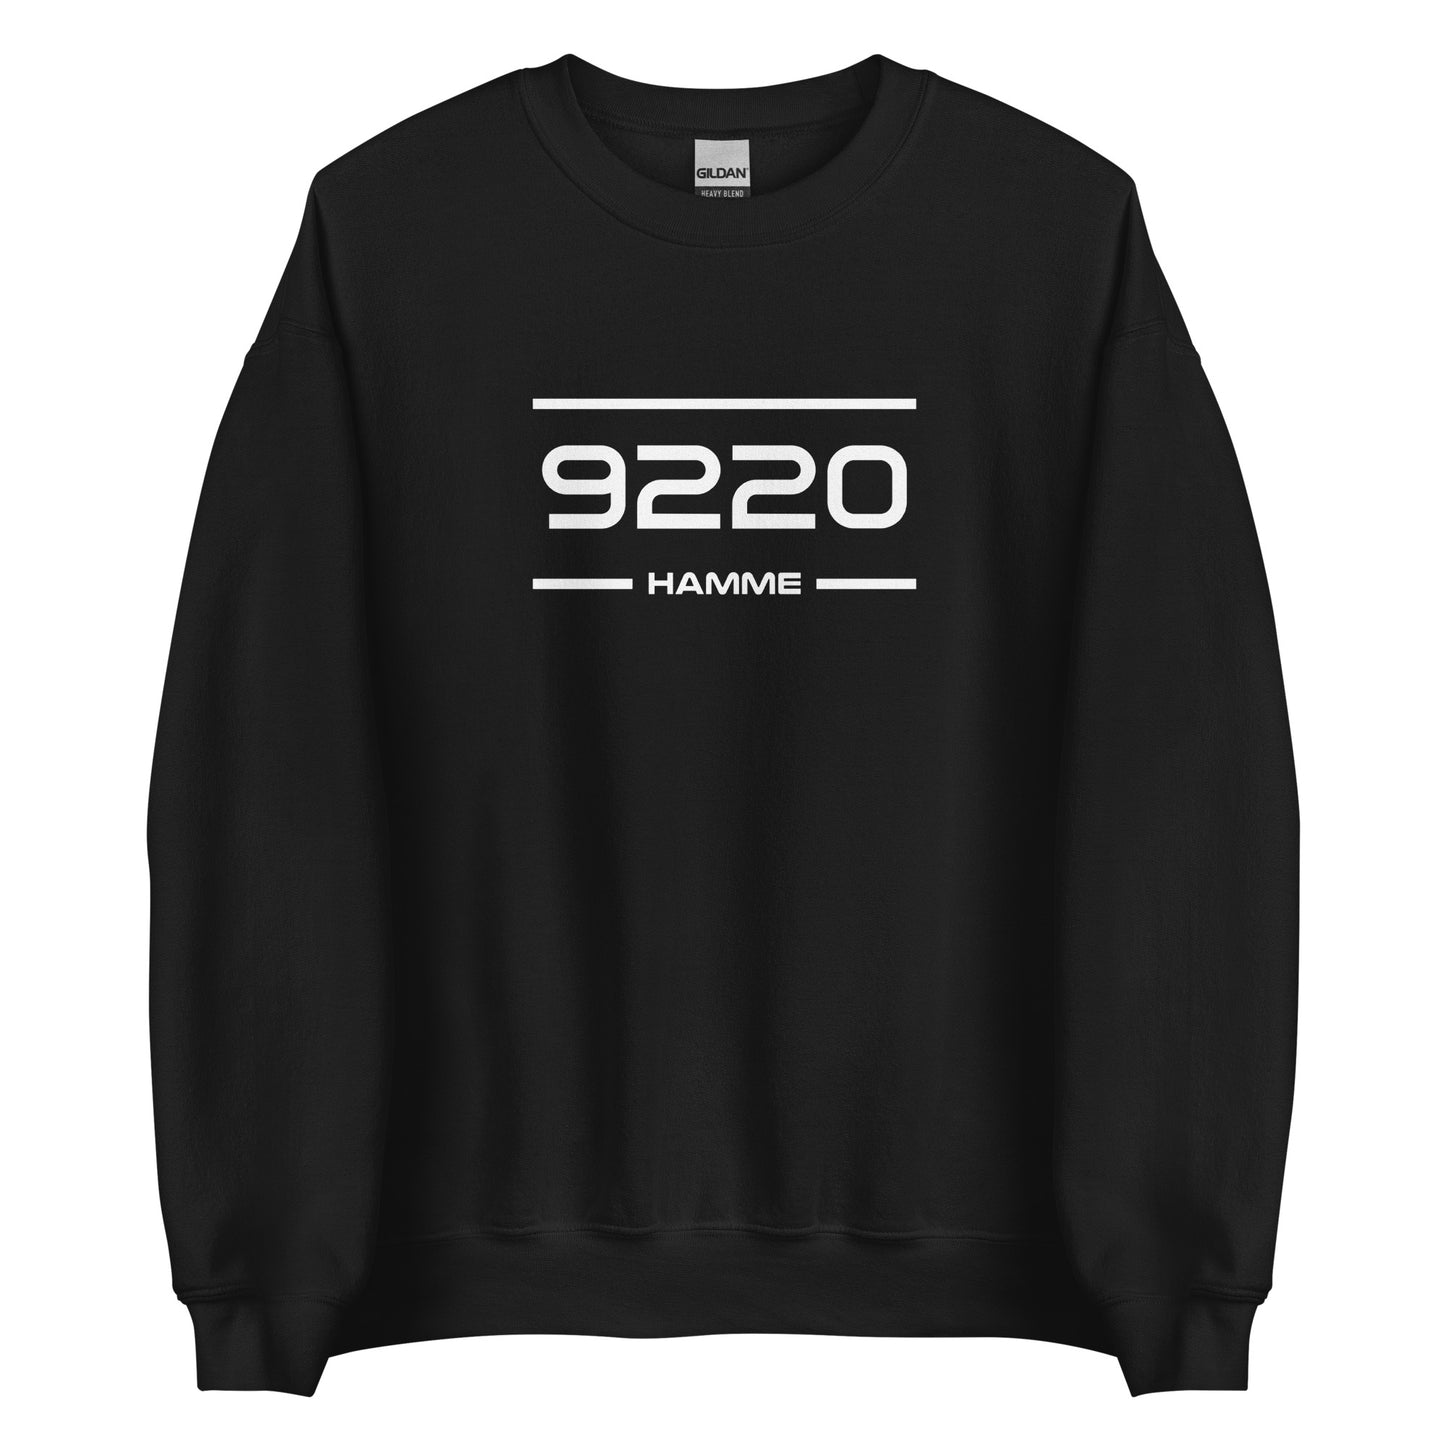 Sweater - 9220 - Hamme (M/V)